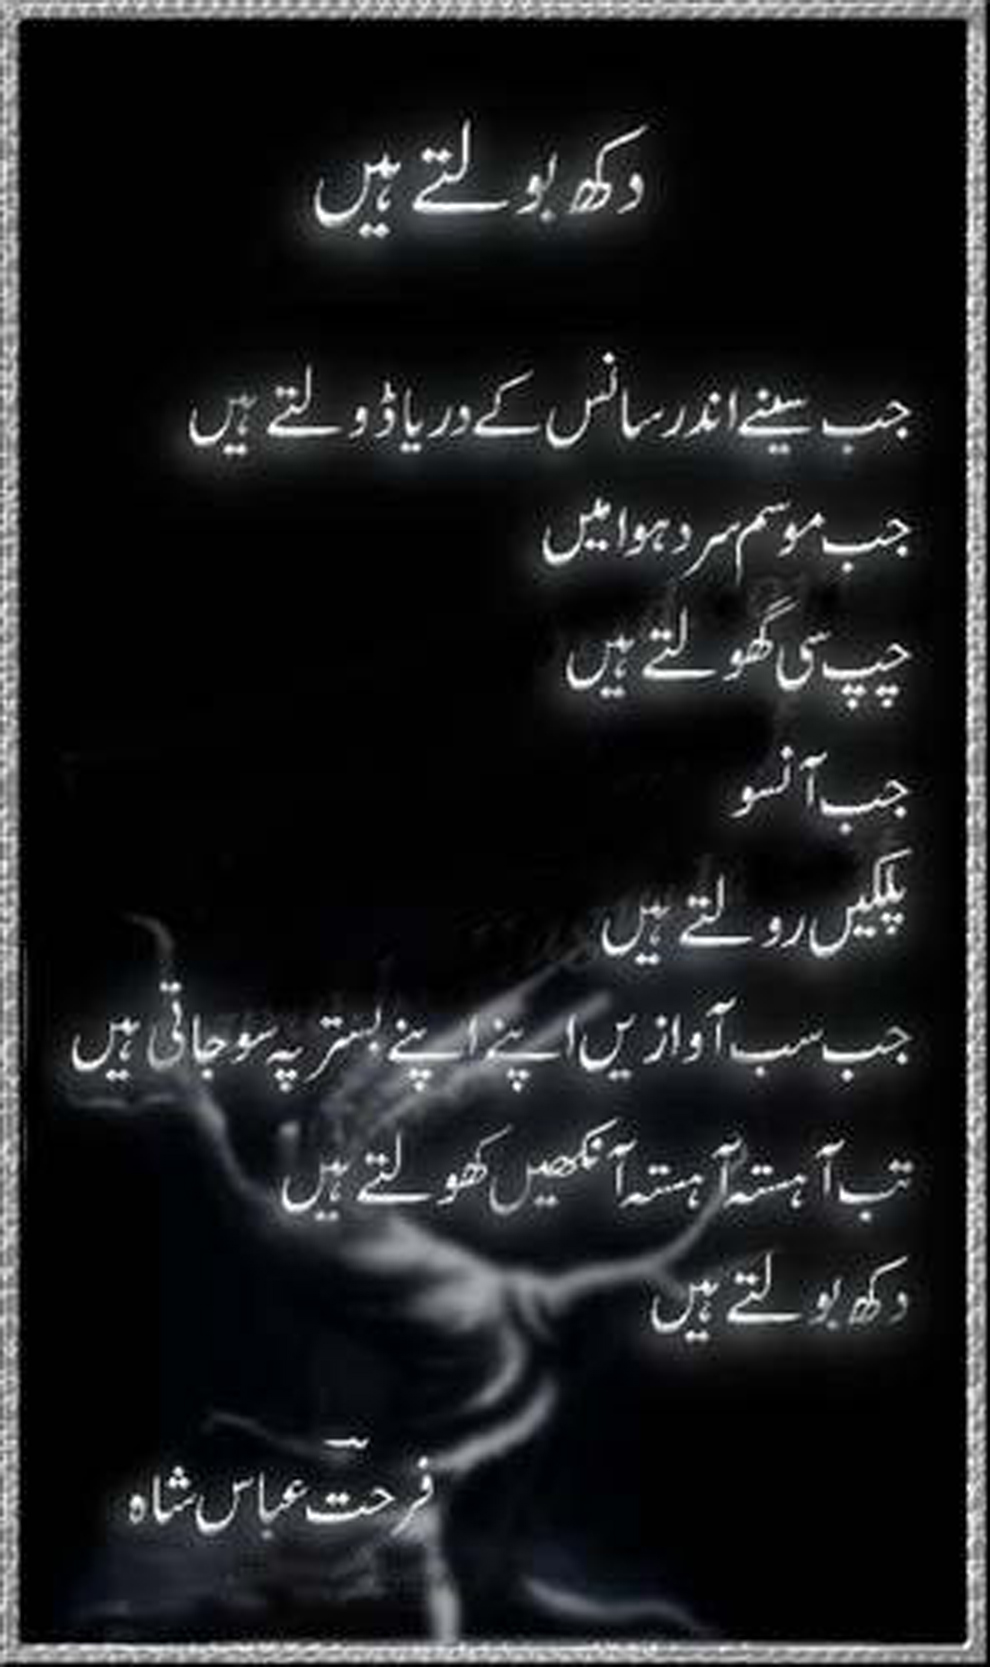 Wallpapers for Boys in Urdu Sad Wallpaper With Poetry Sad Poetry